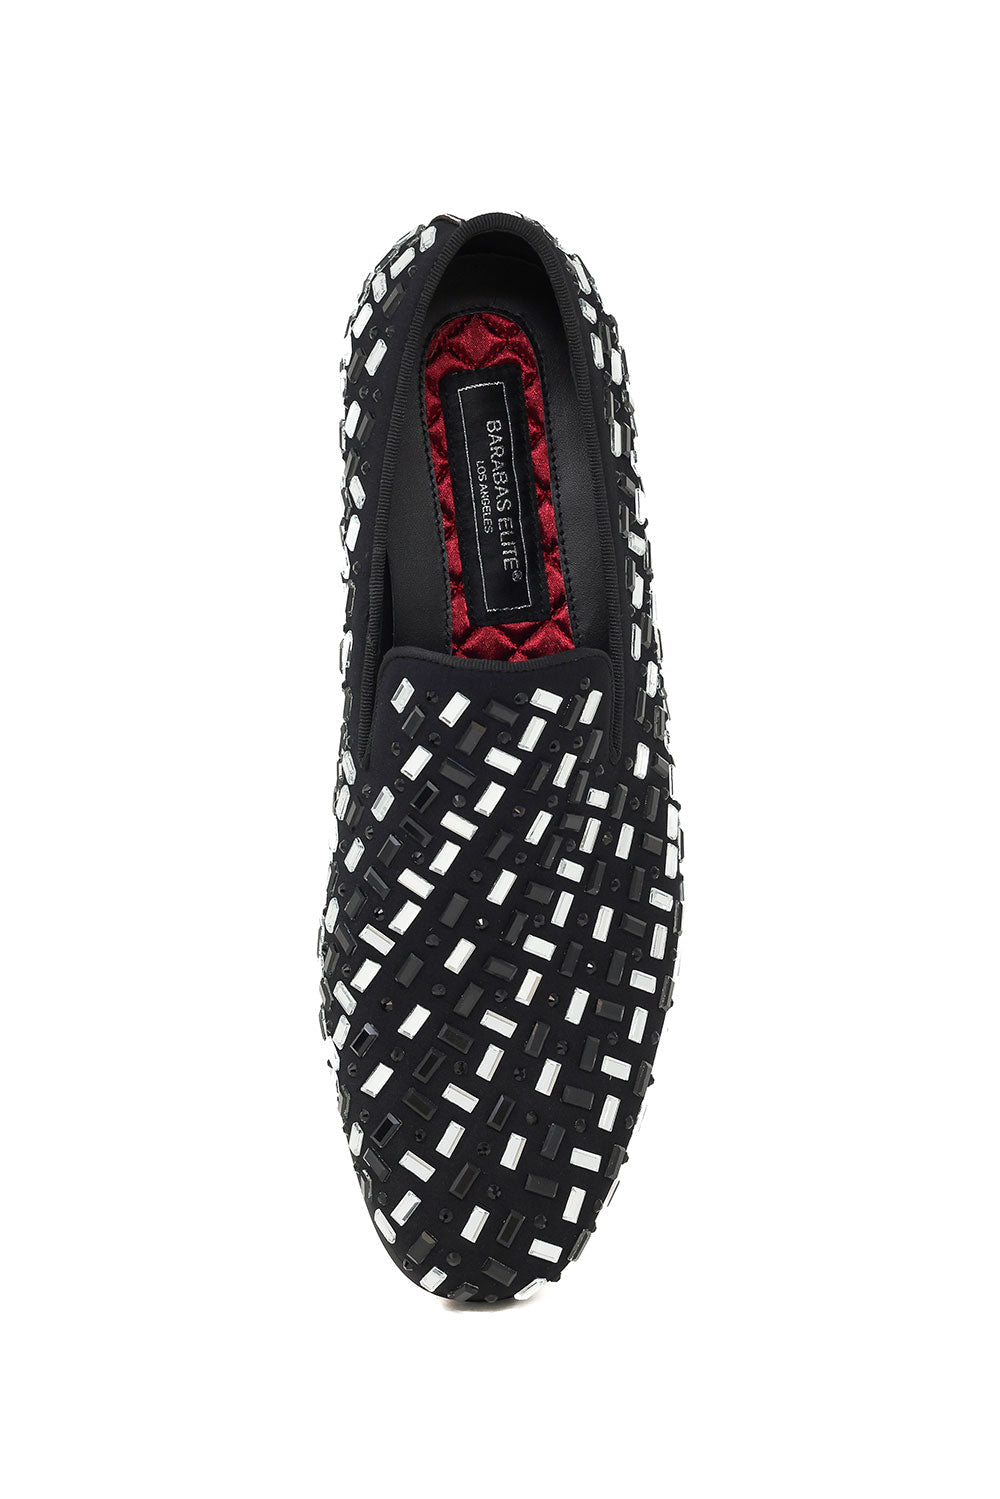 BARABAS Men's Rectangle Rhinestone Jewel Slip On Dress Shoes 2ESH4 Black